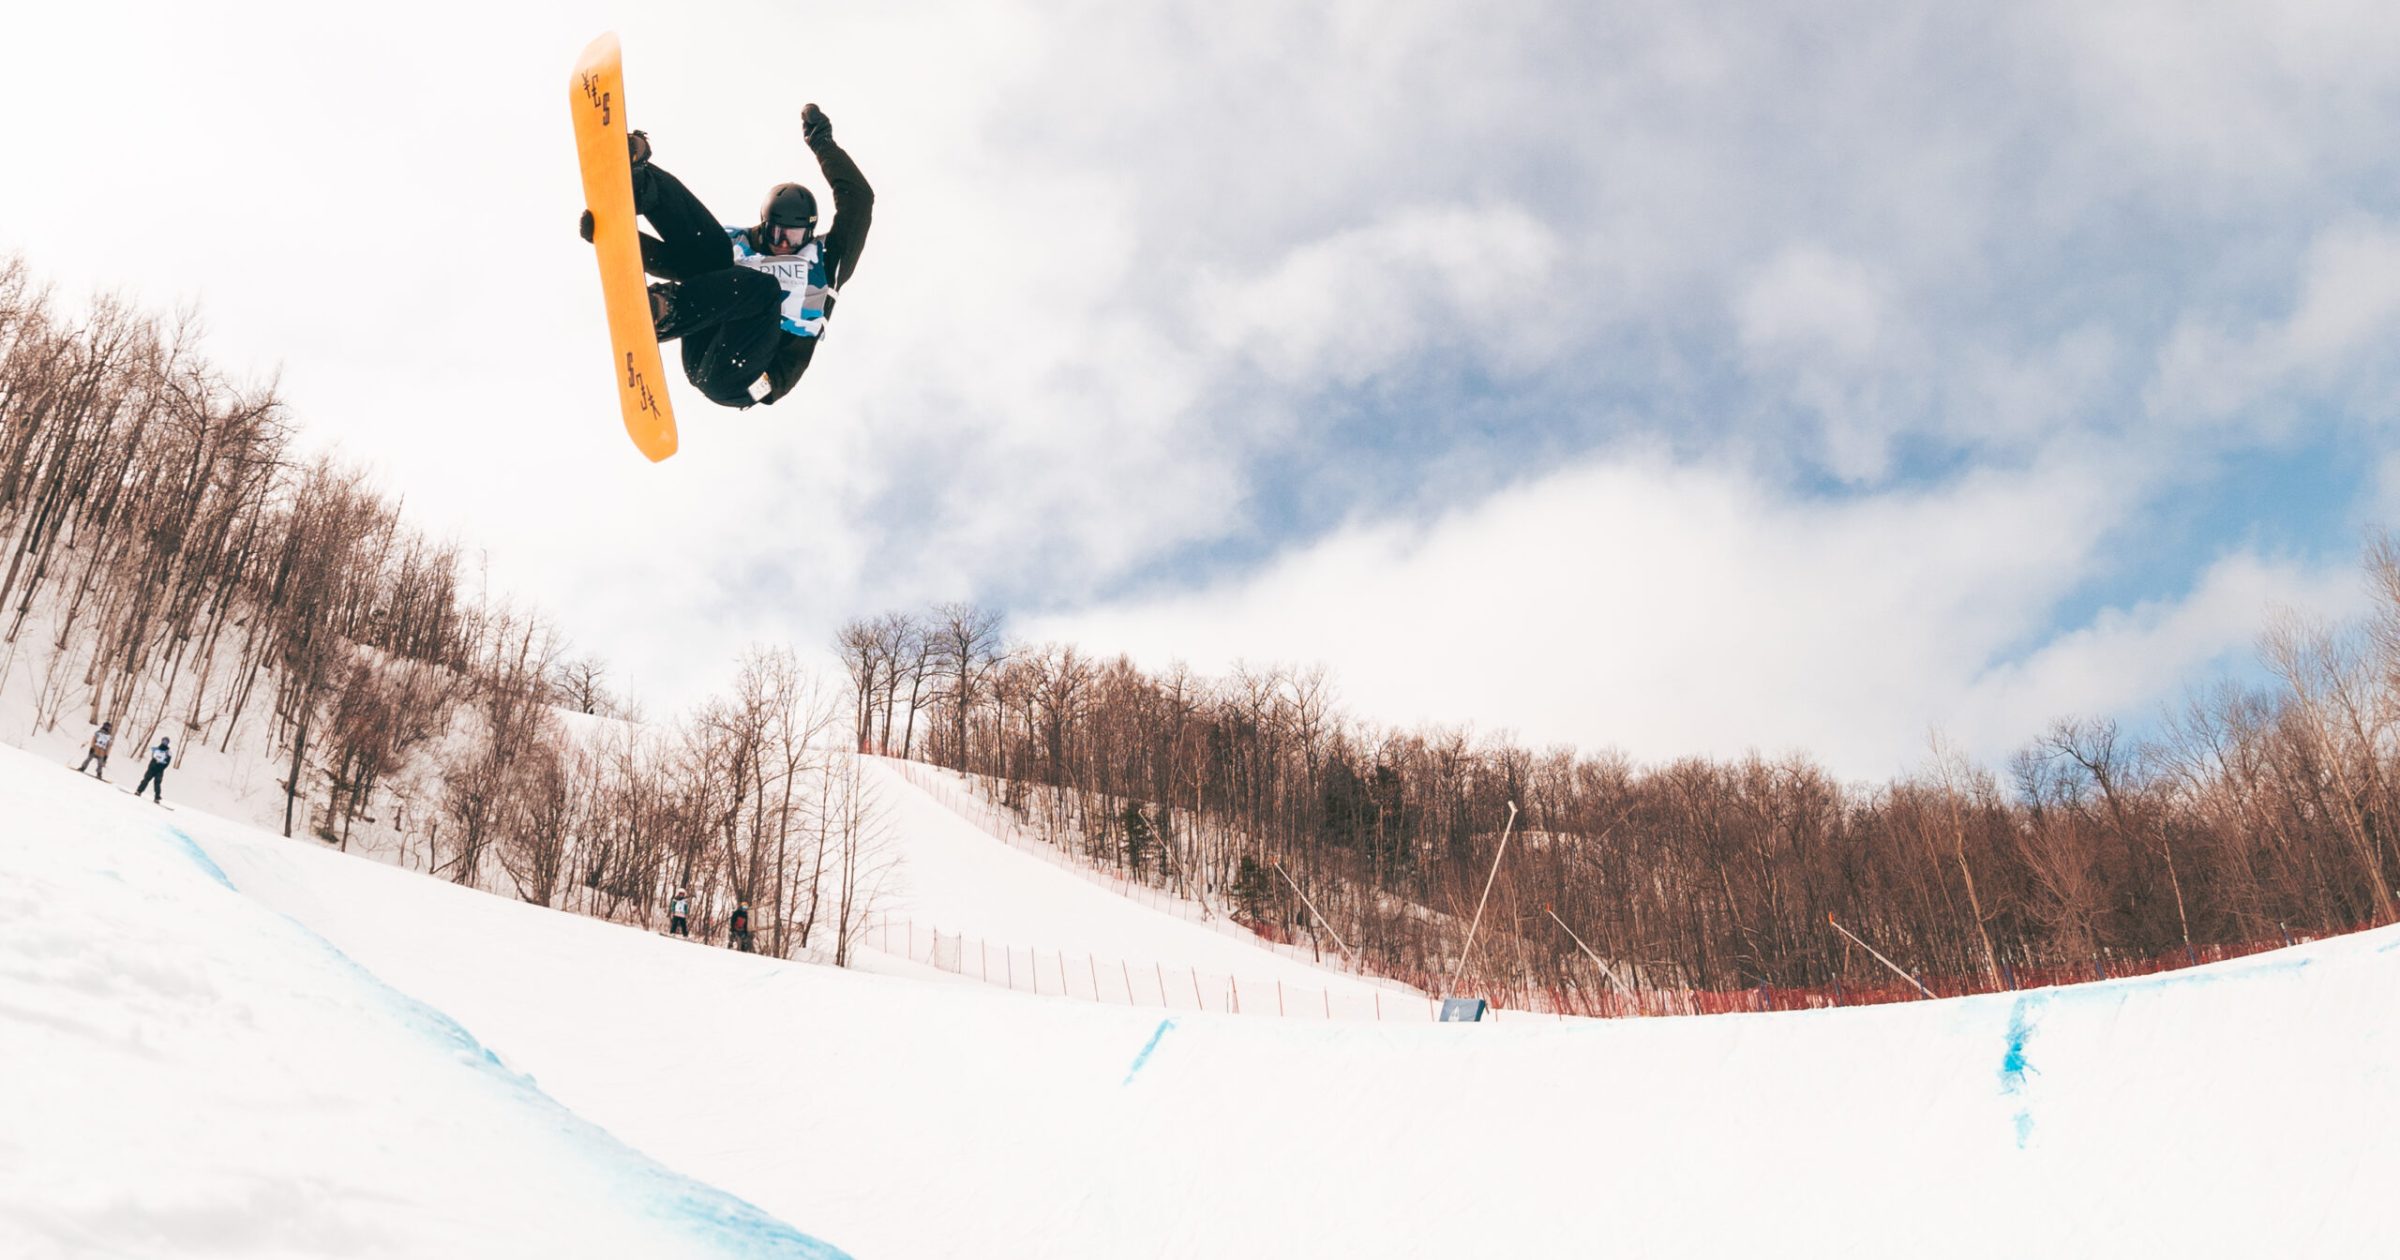 halfpipe-snowboarder-jump-midair